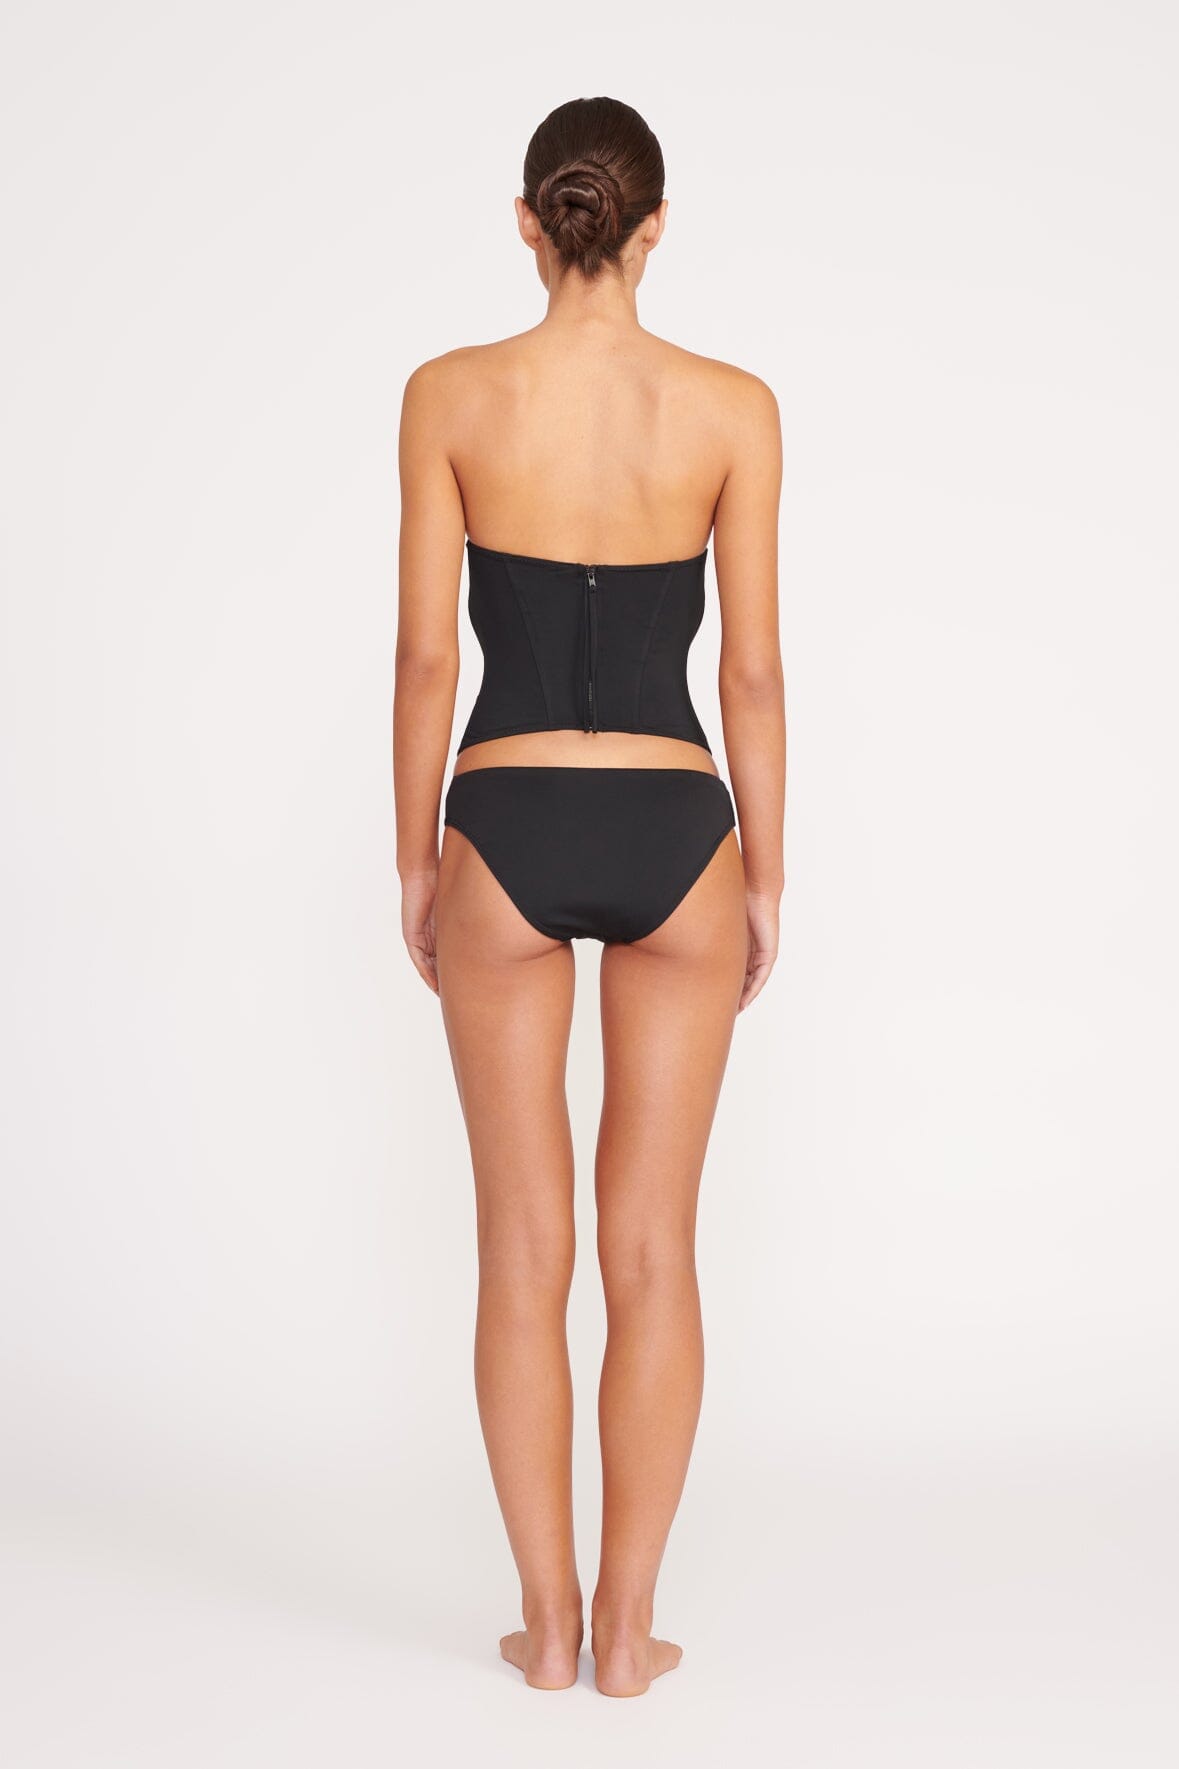 NEW ARRIVALS Flourish New High Quality Pure Silk bikini Style